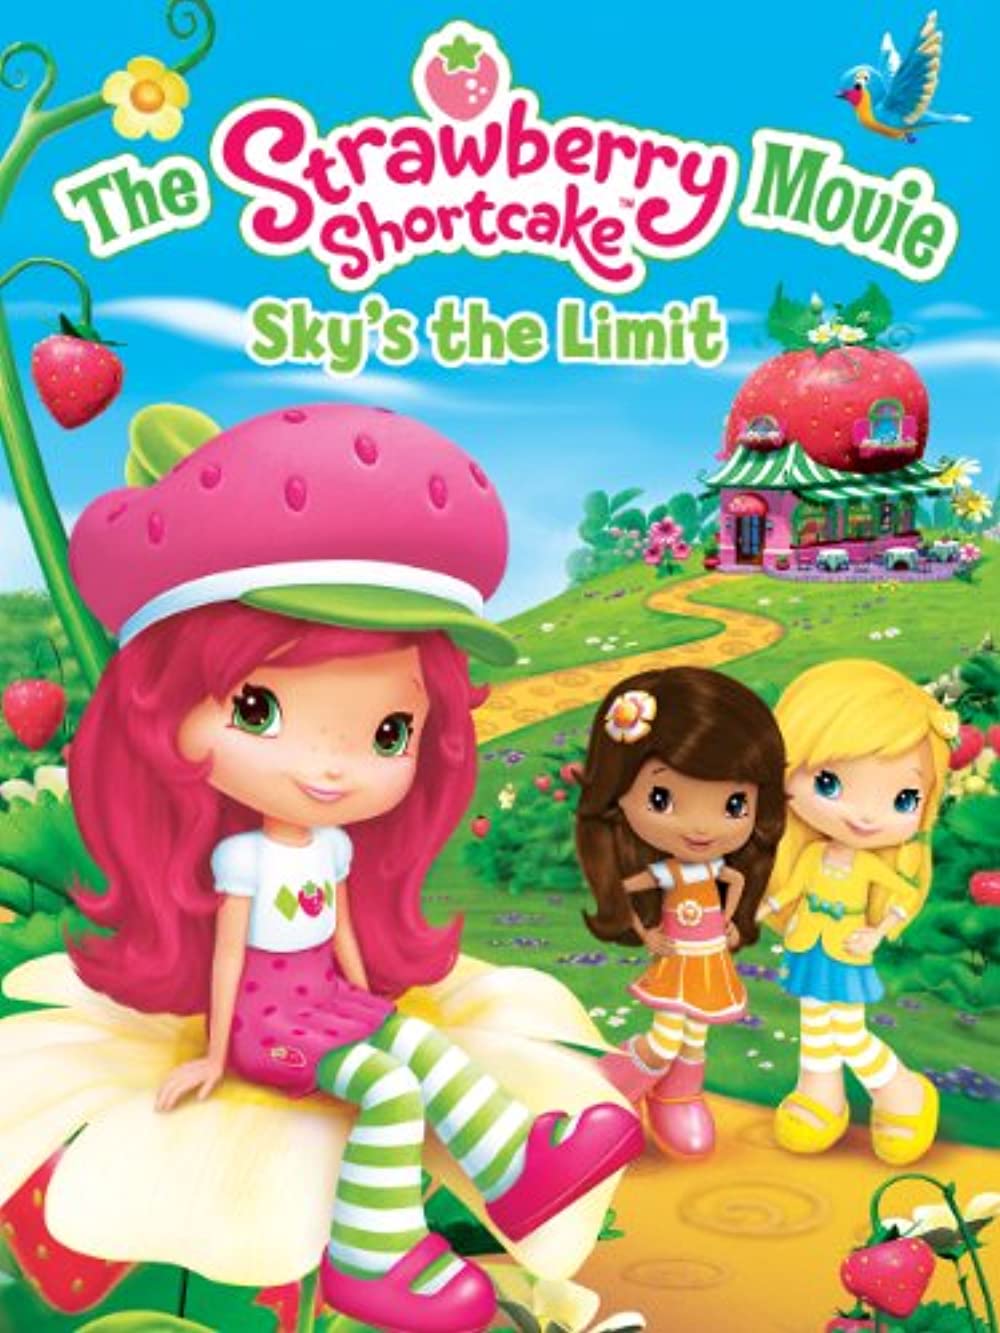 Download The Strawberry Shortcake Movie: Sky's the Limit Movie | Download The Strawberry Shortcake Movie: Sky's The Limit Full Movie